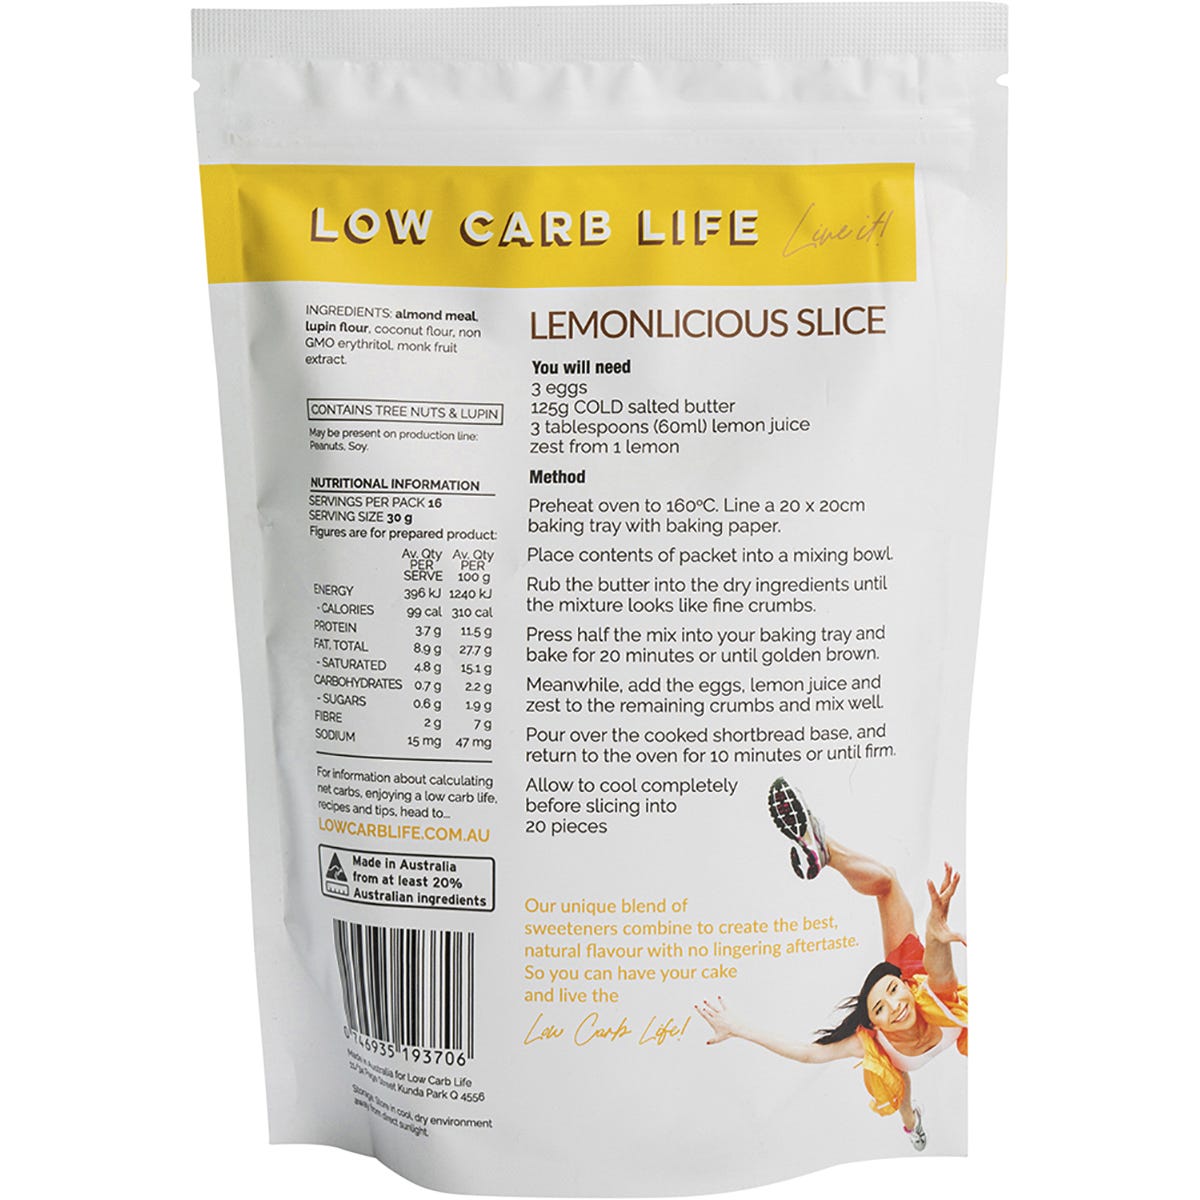 Low Carb Life Lemonlicious Slice Keto Bake Mix